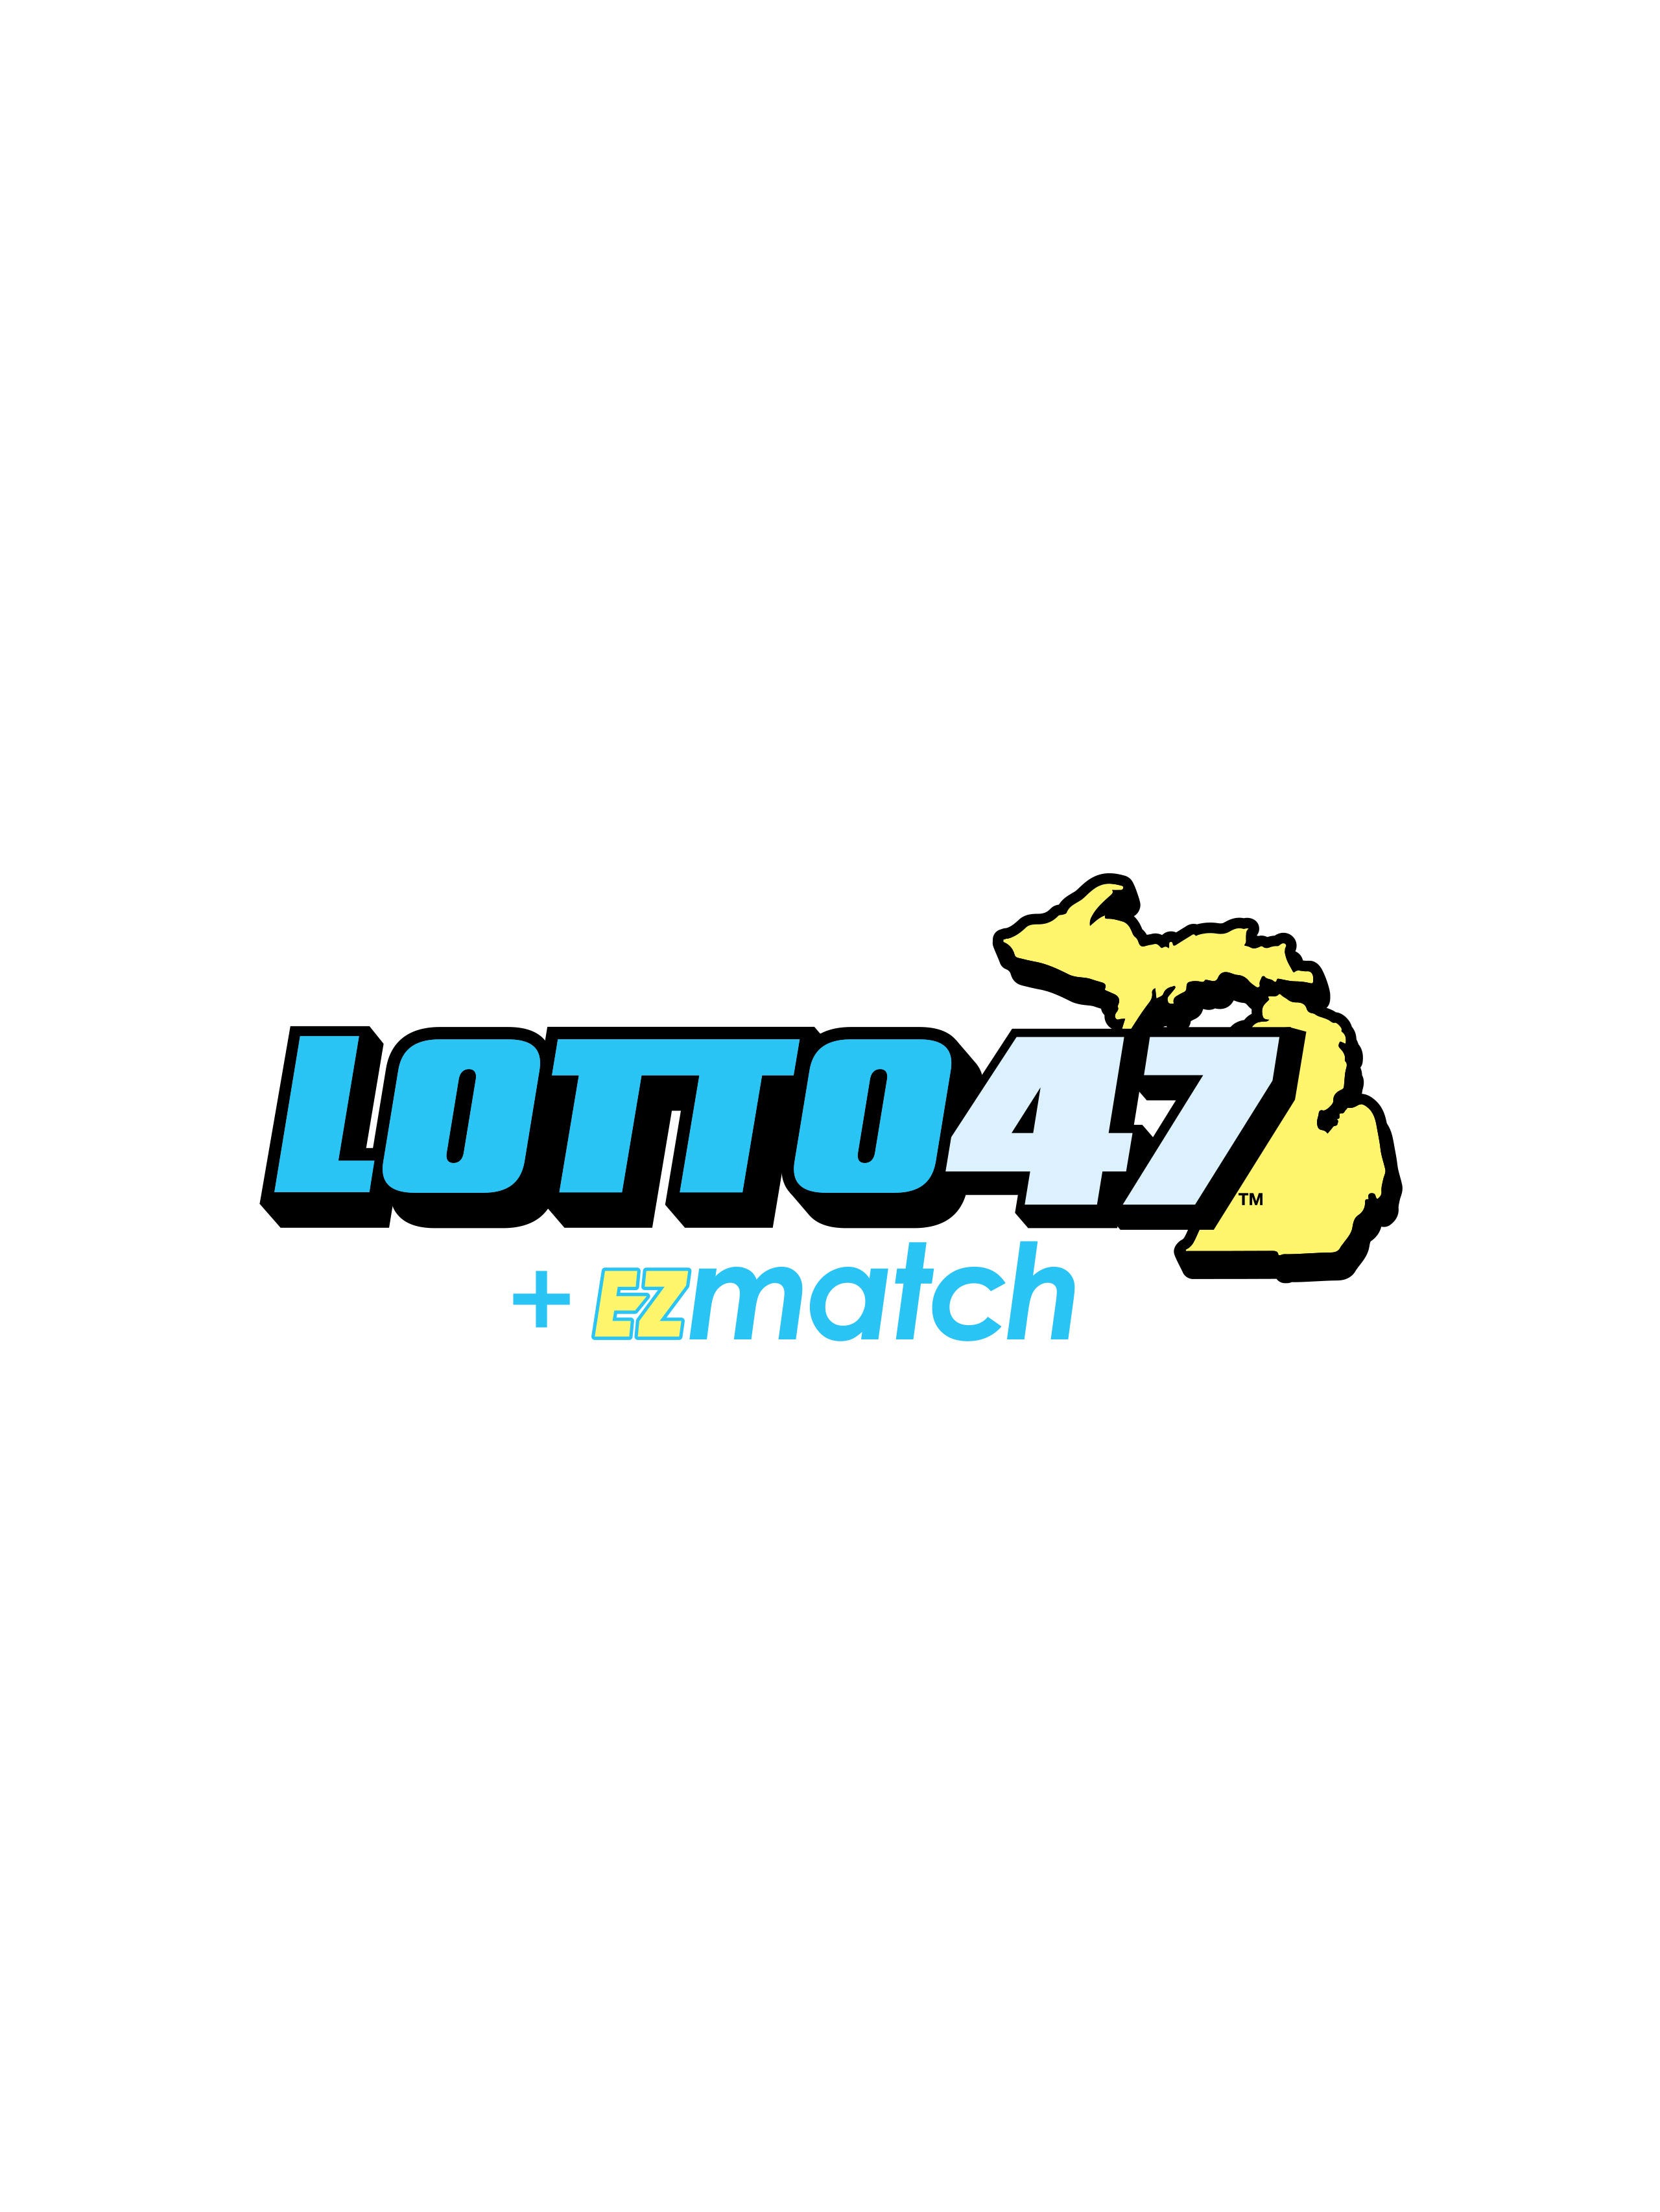 lotto 47 winning numbers